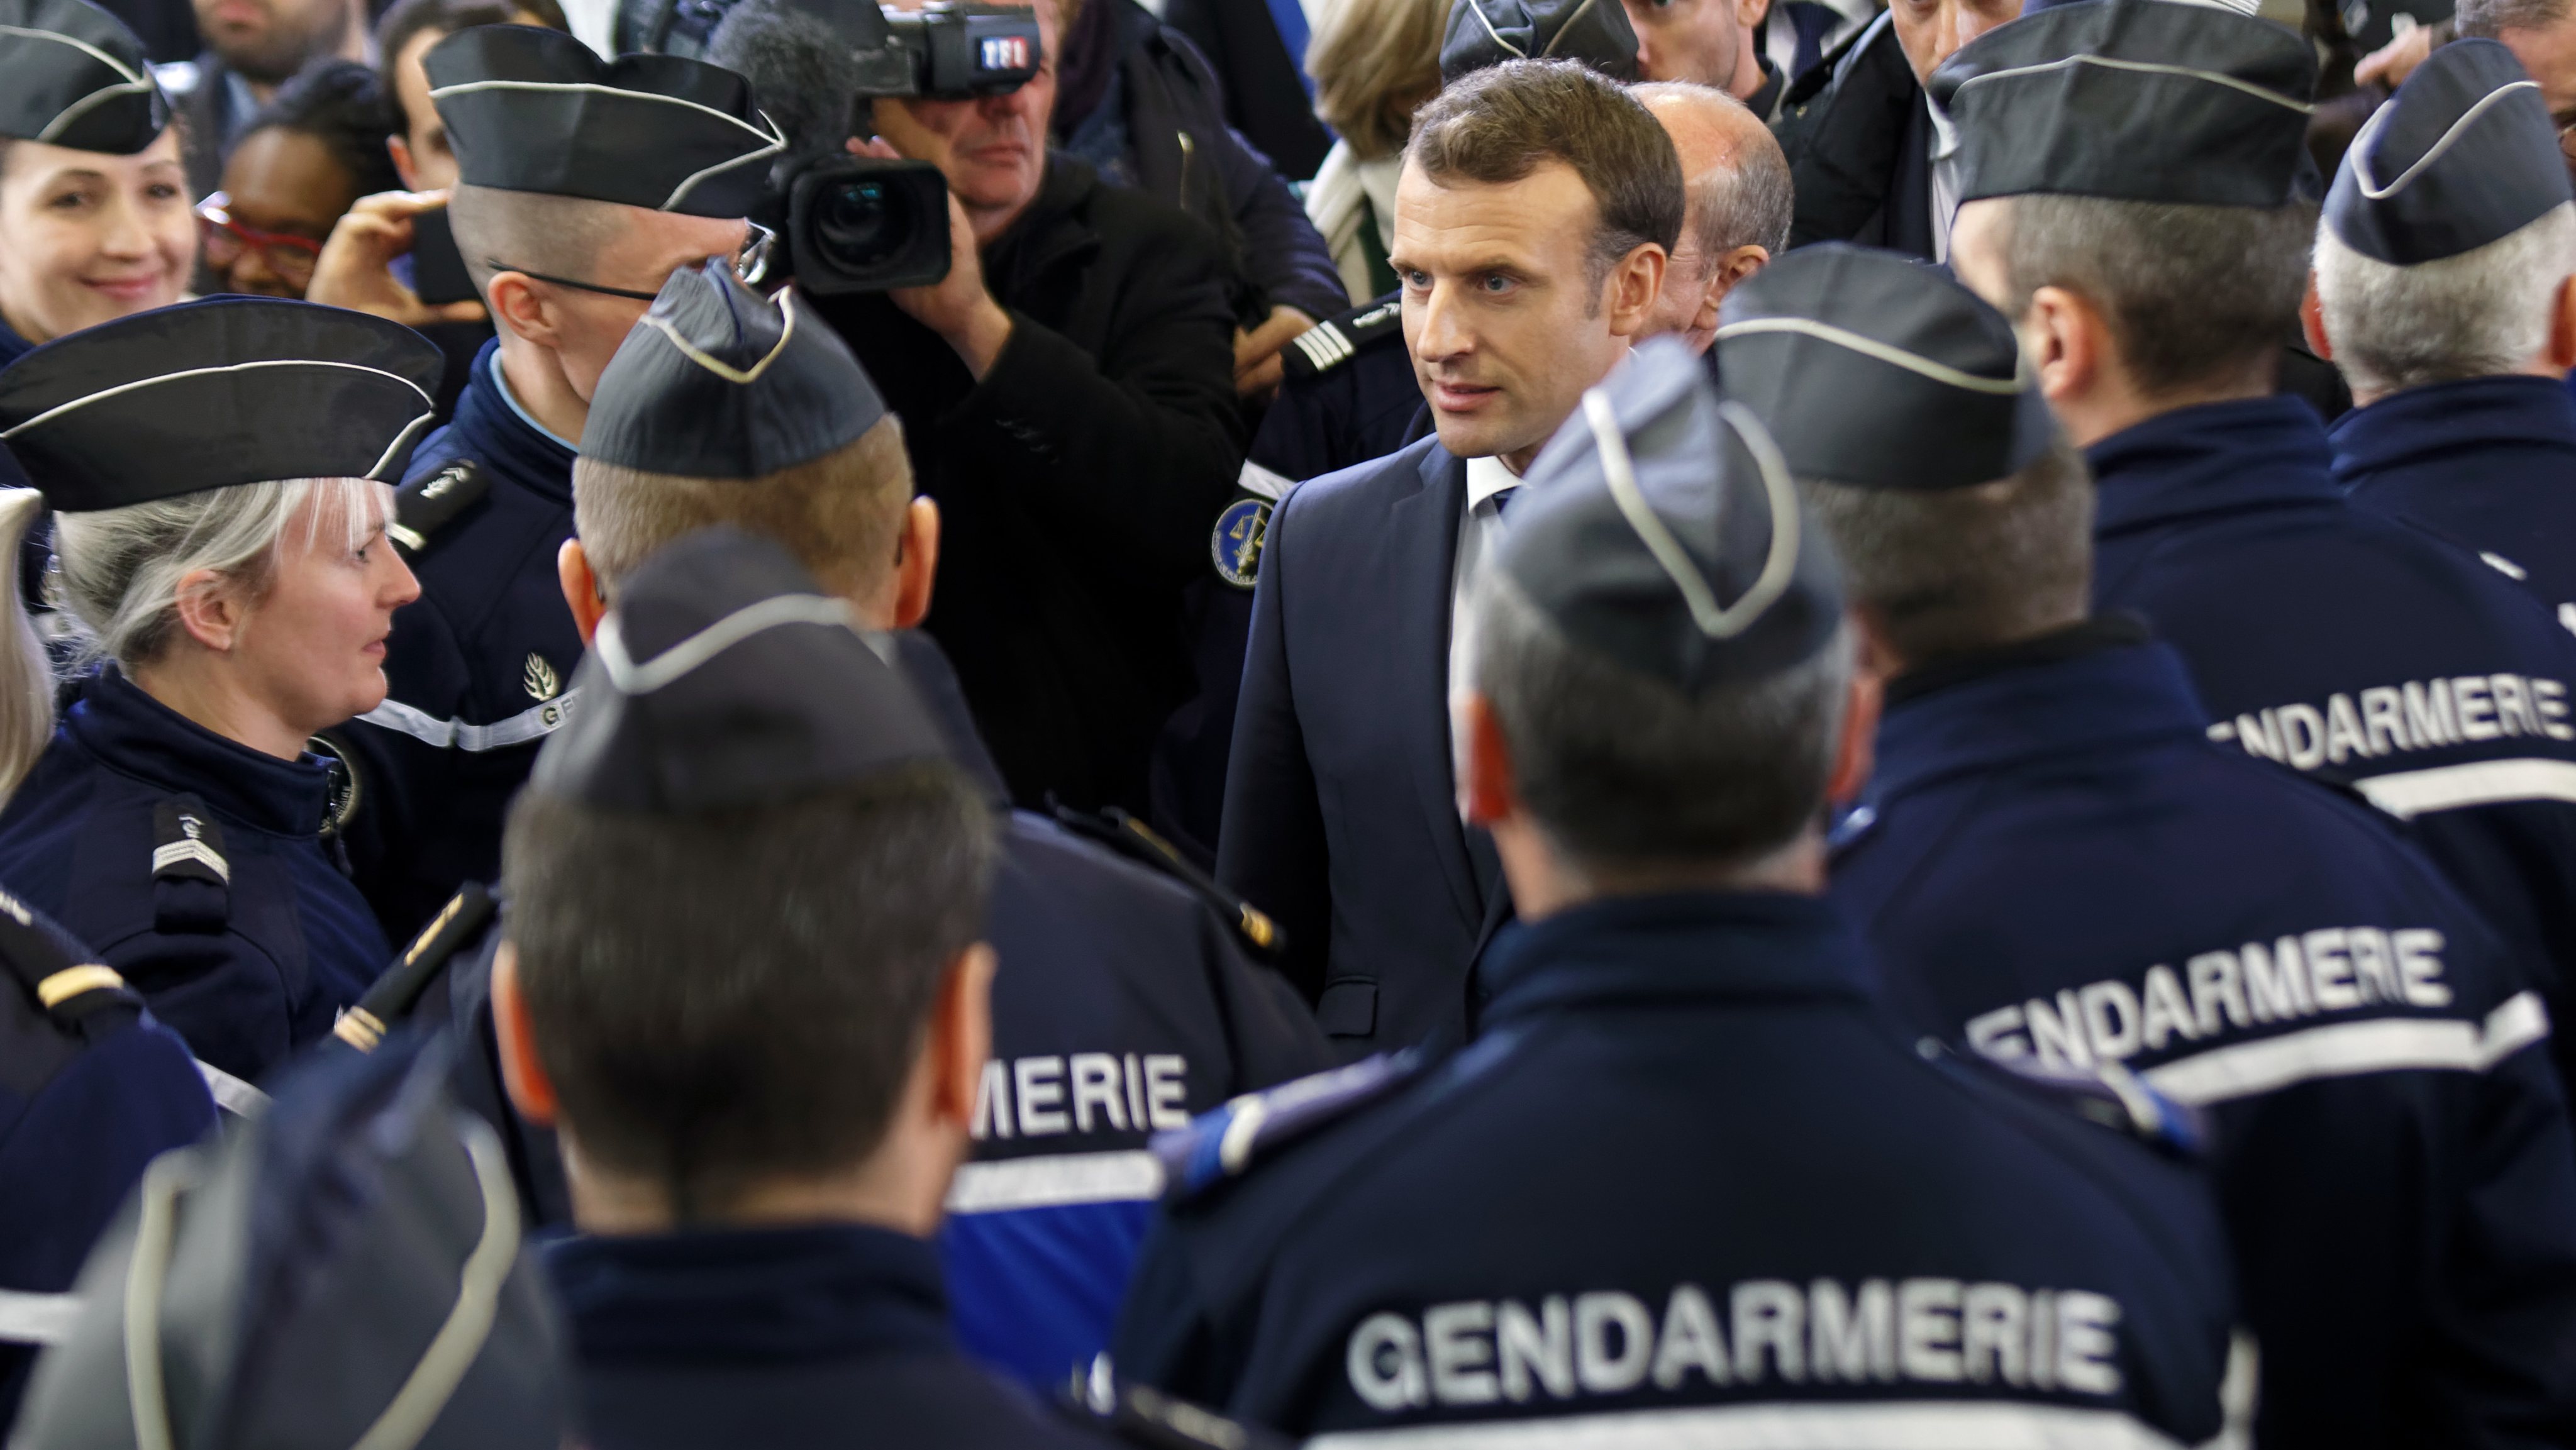 French President Emmanuel Macron Visits Calais